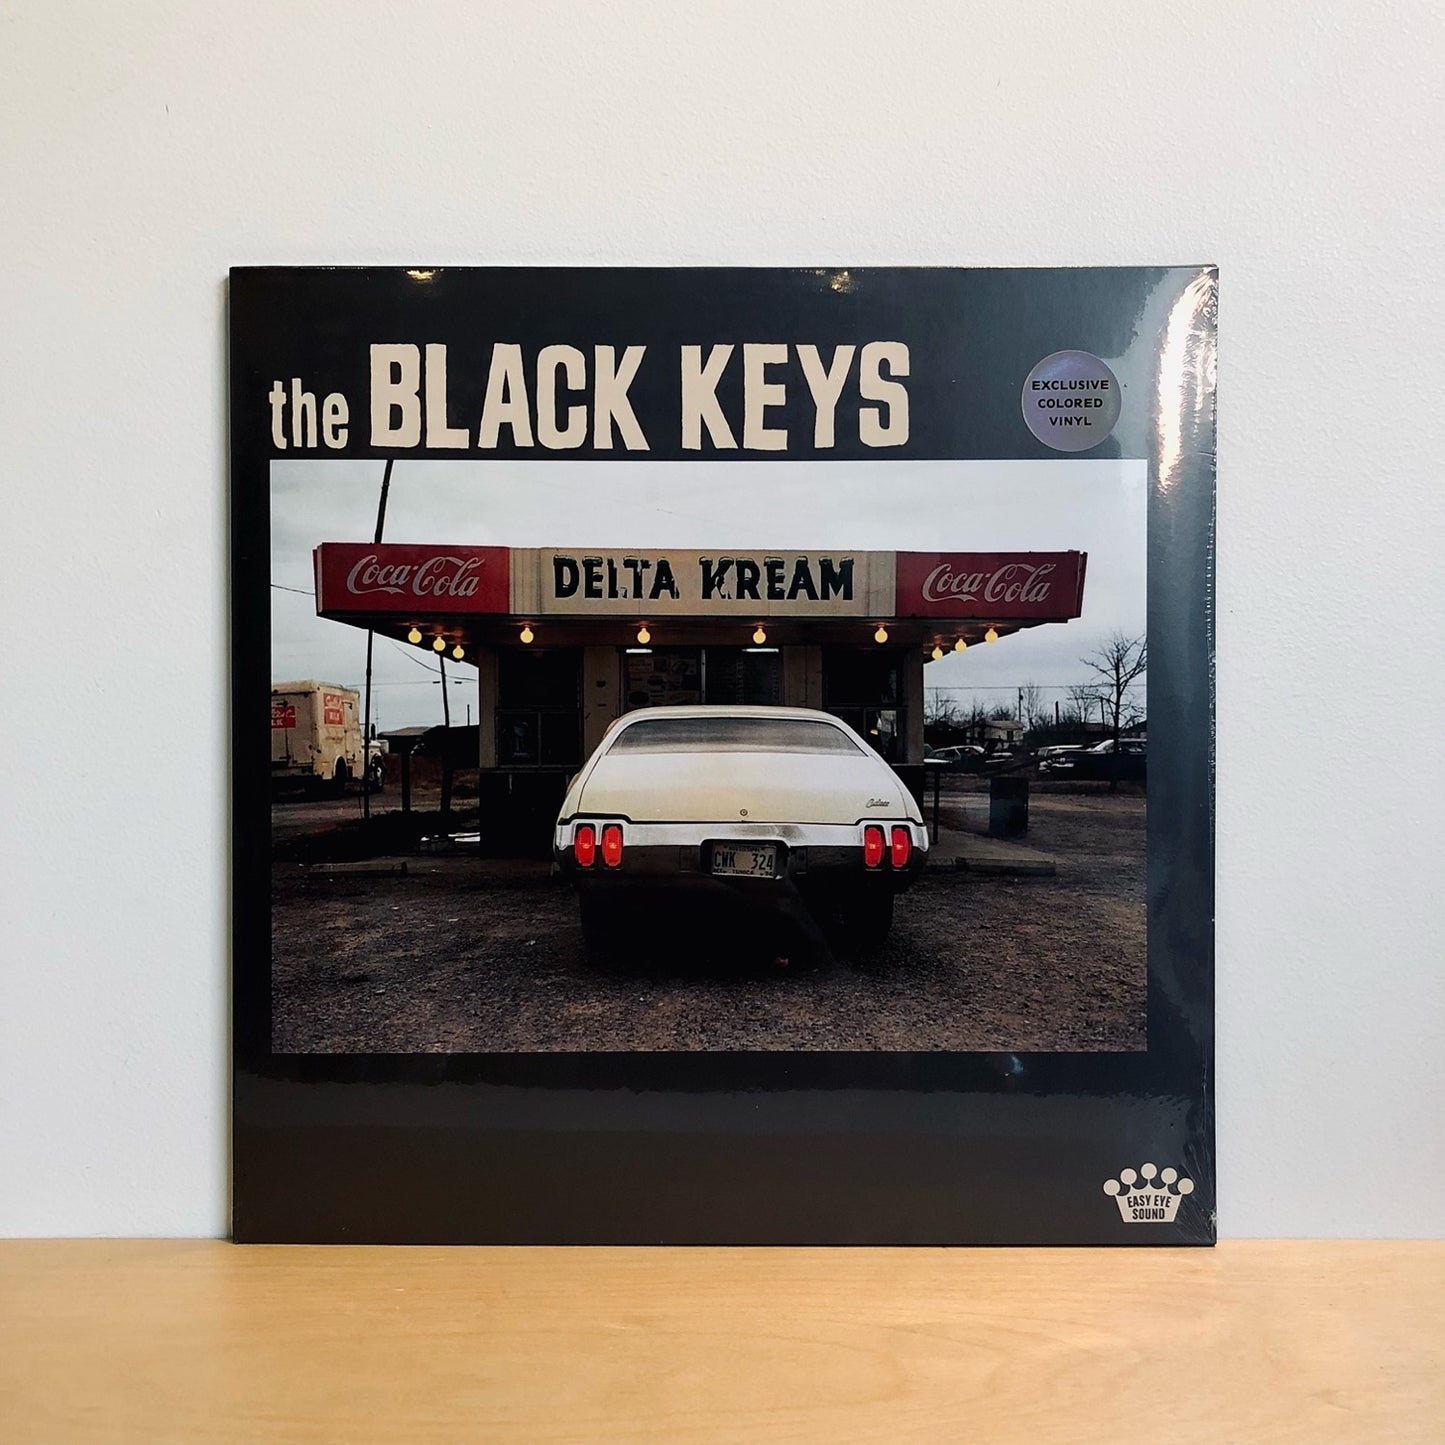 The Black Keys - Delta Kream. 2LP [Ltd Ed. Indie Exclusive Smokey Coloured Vinyl]